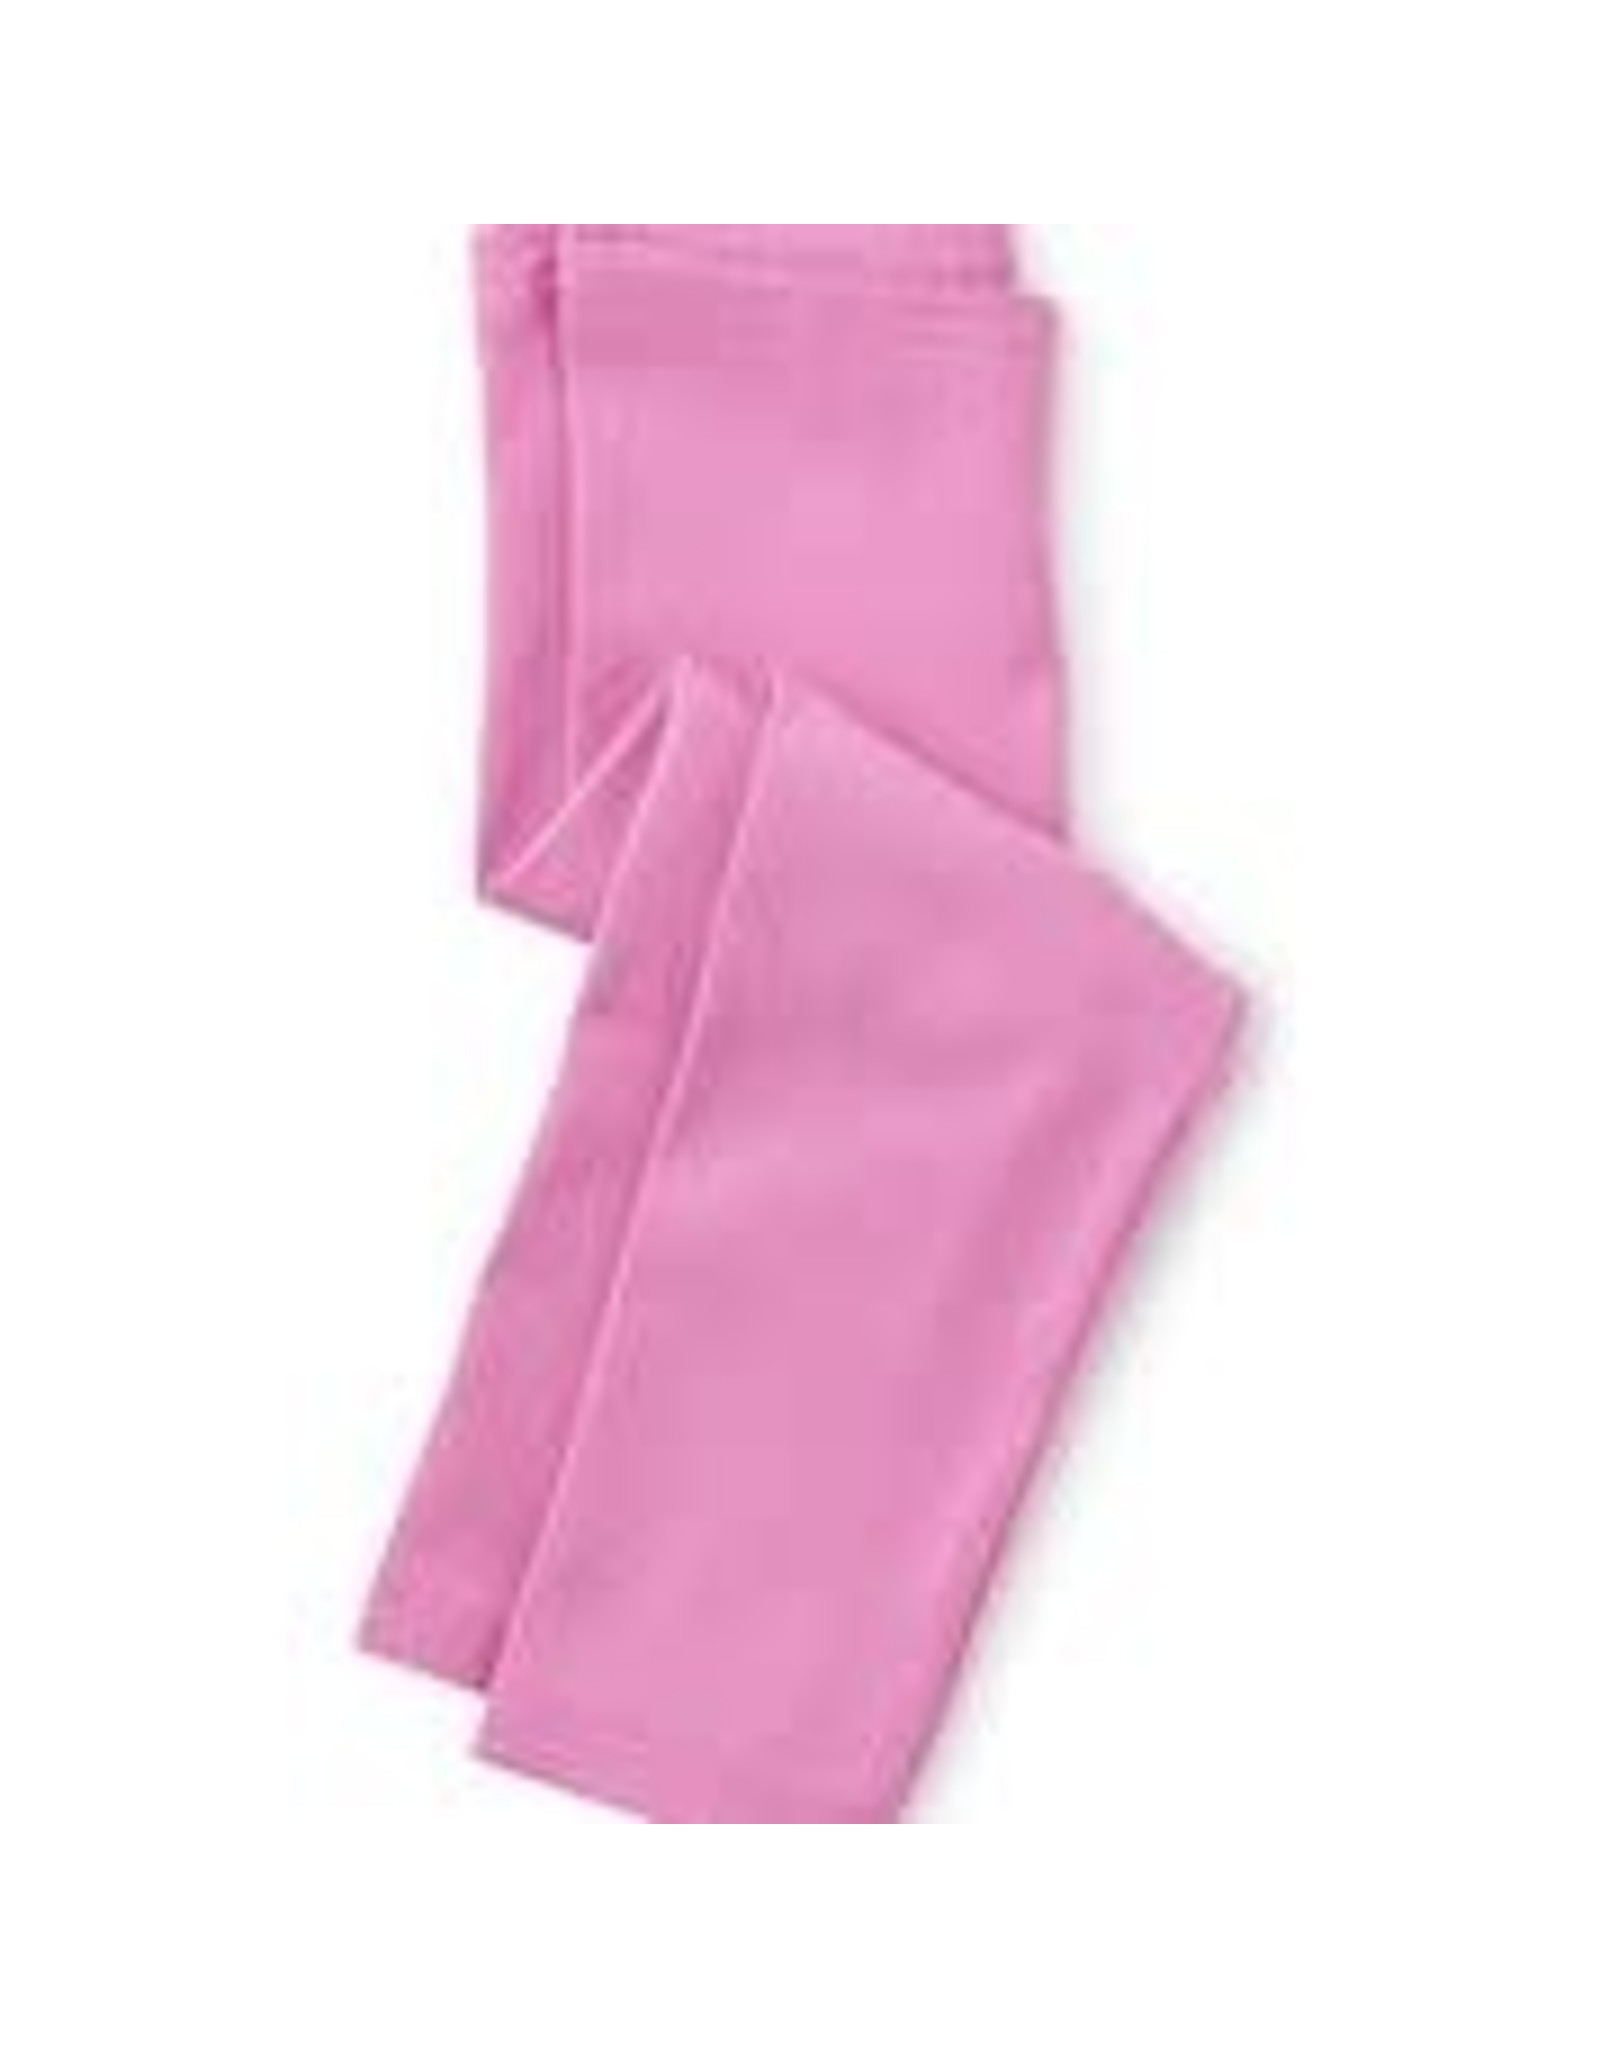 pink solid legging